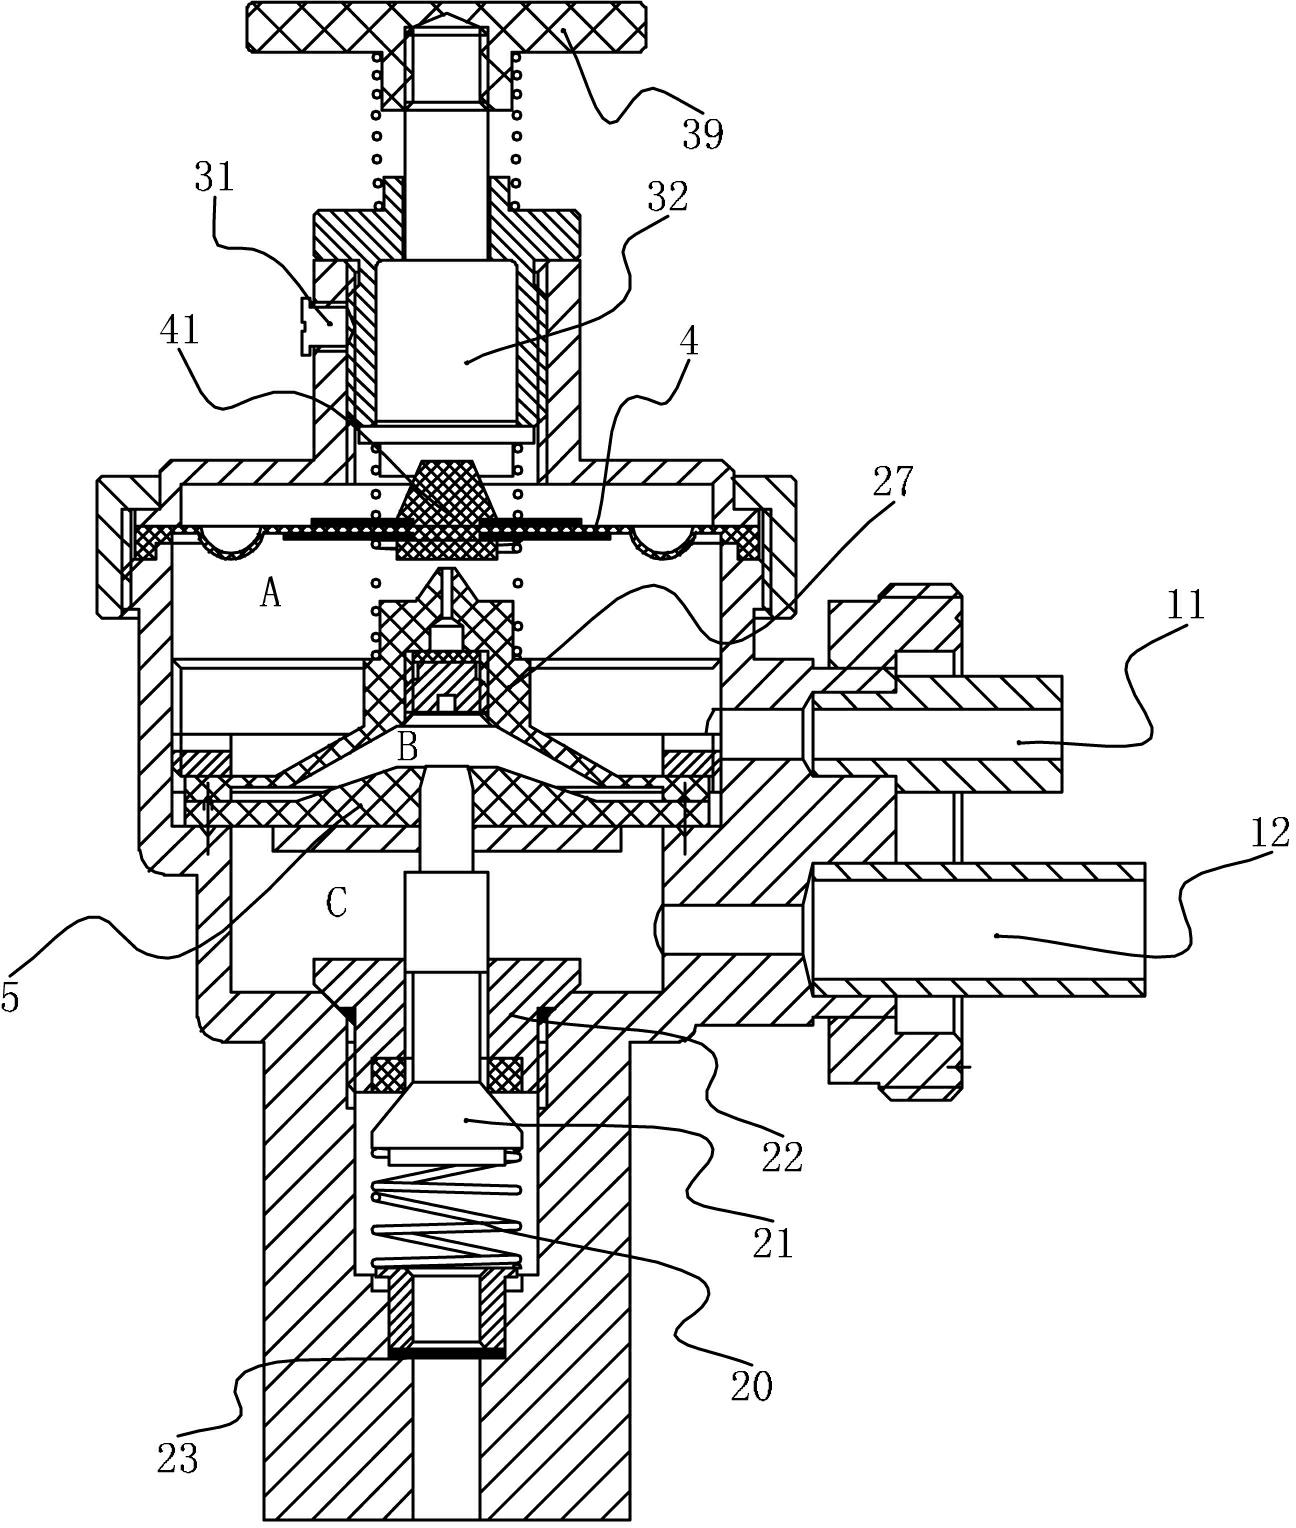 Pressure flow regulator